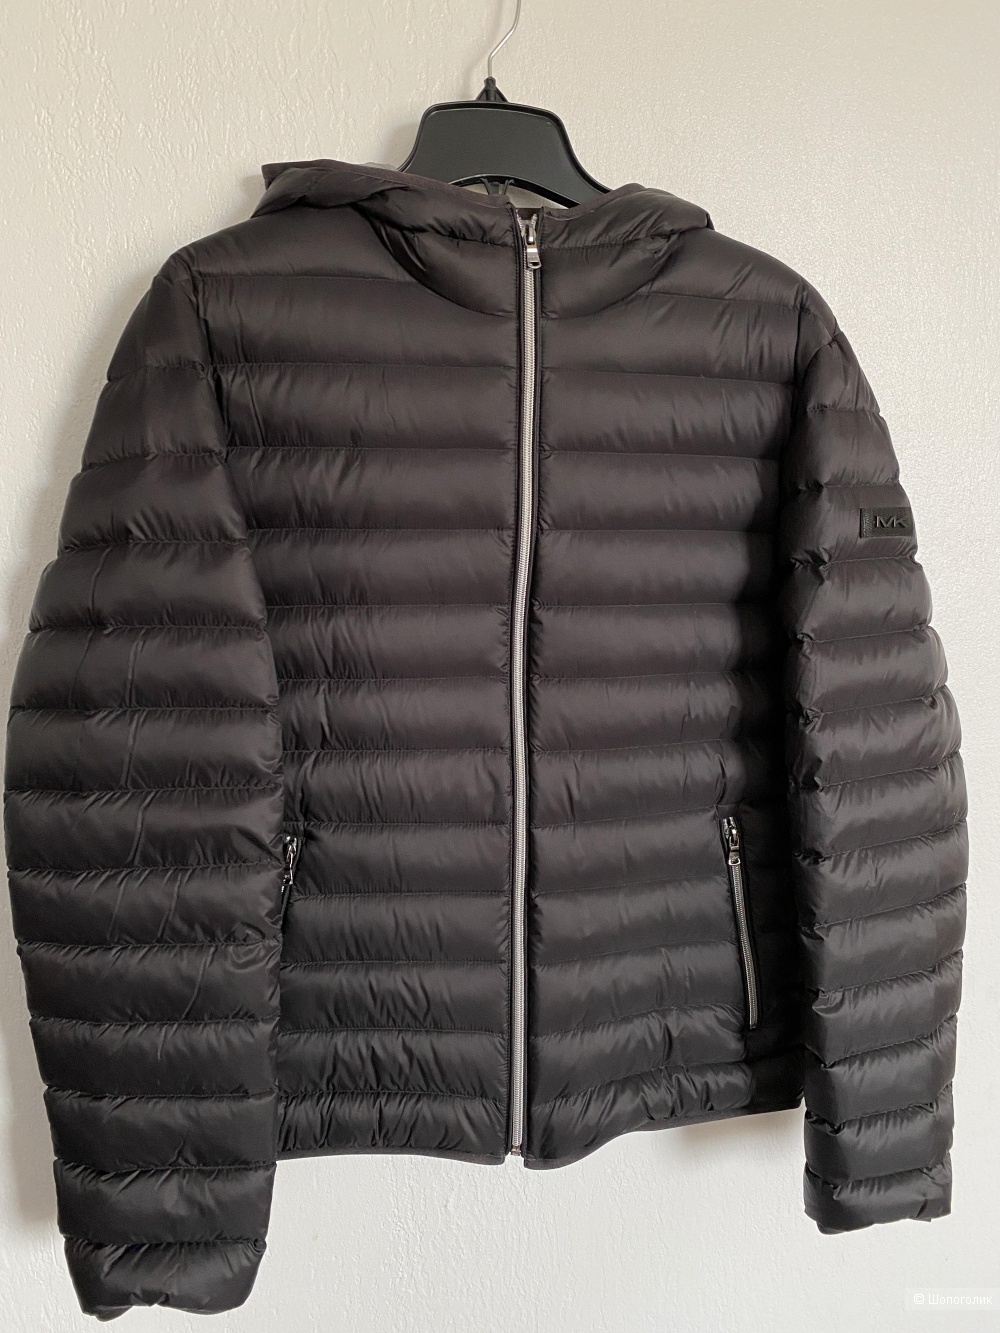 Куртка Michael Kors черного цвета, размер М